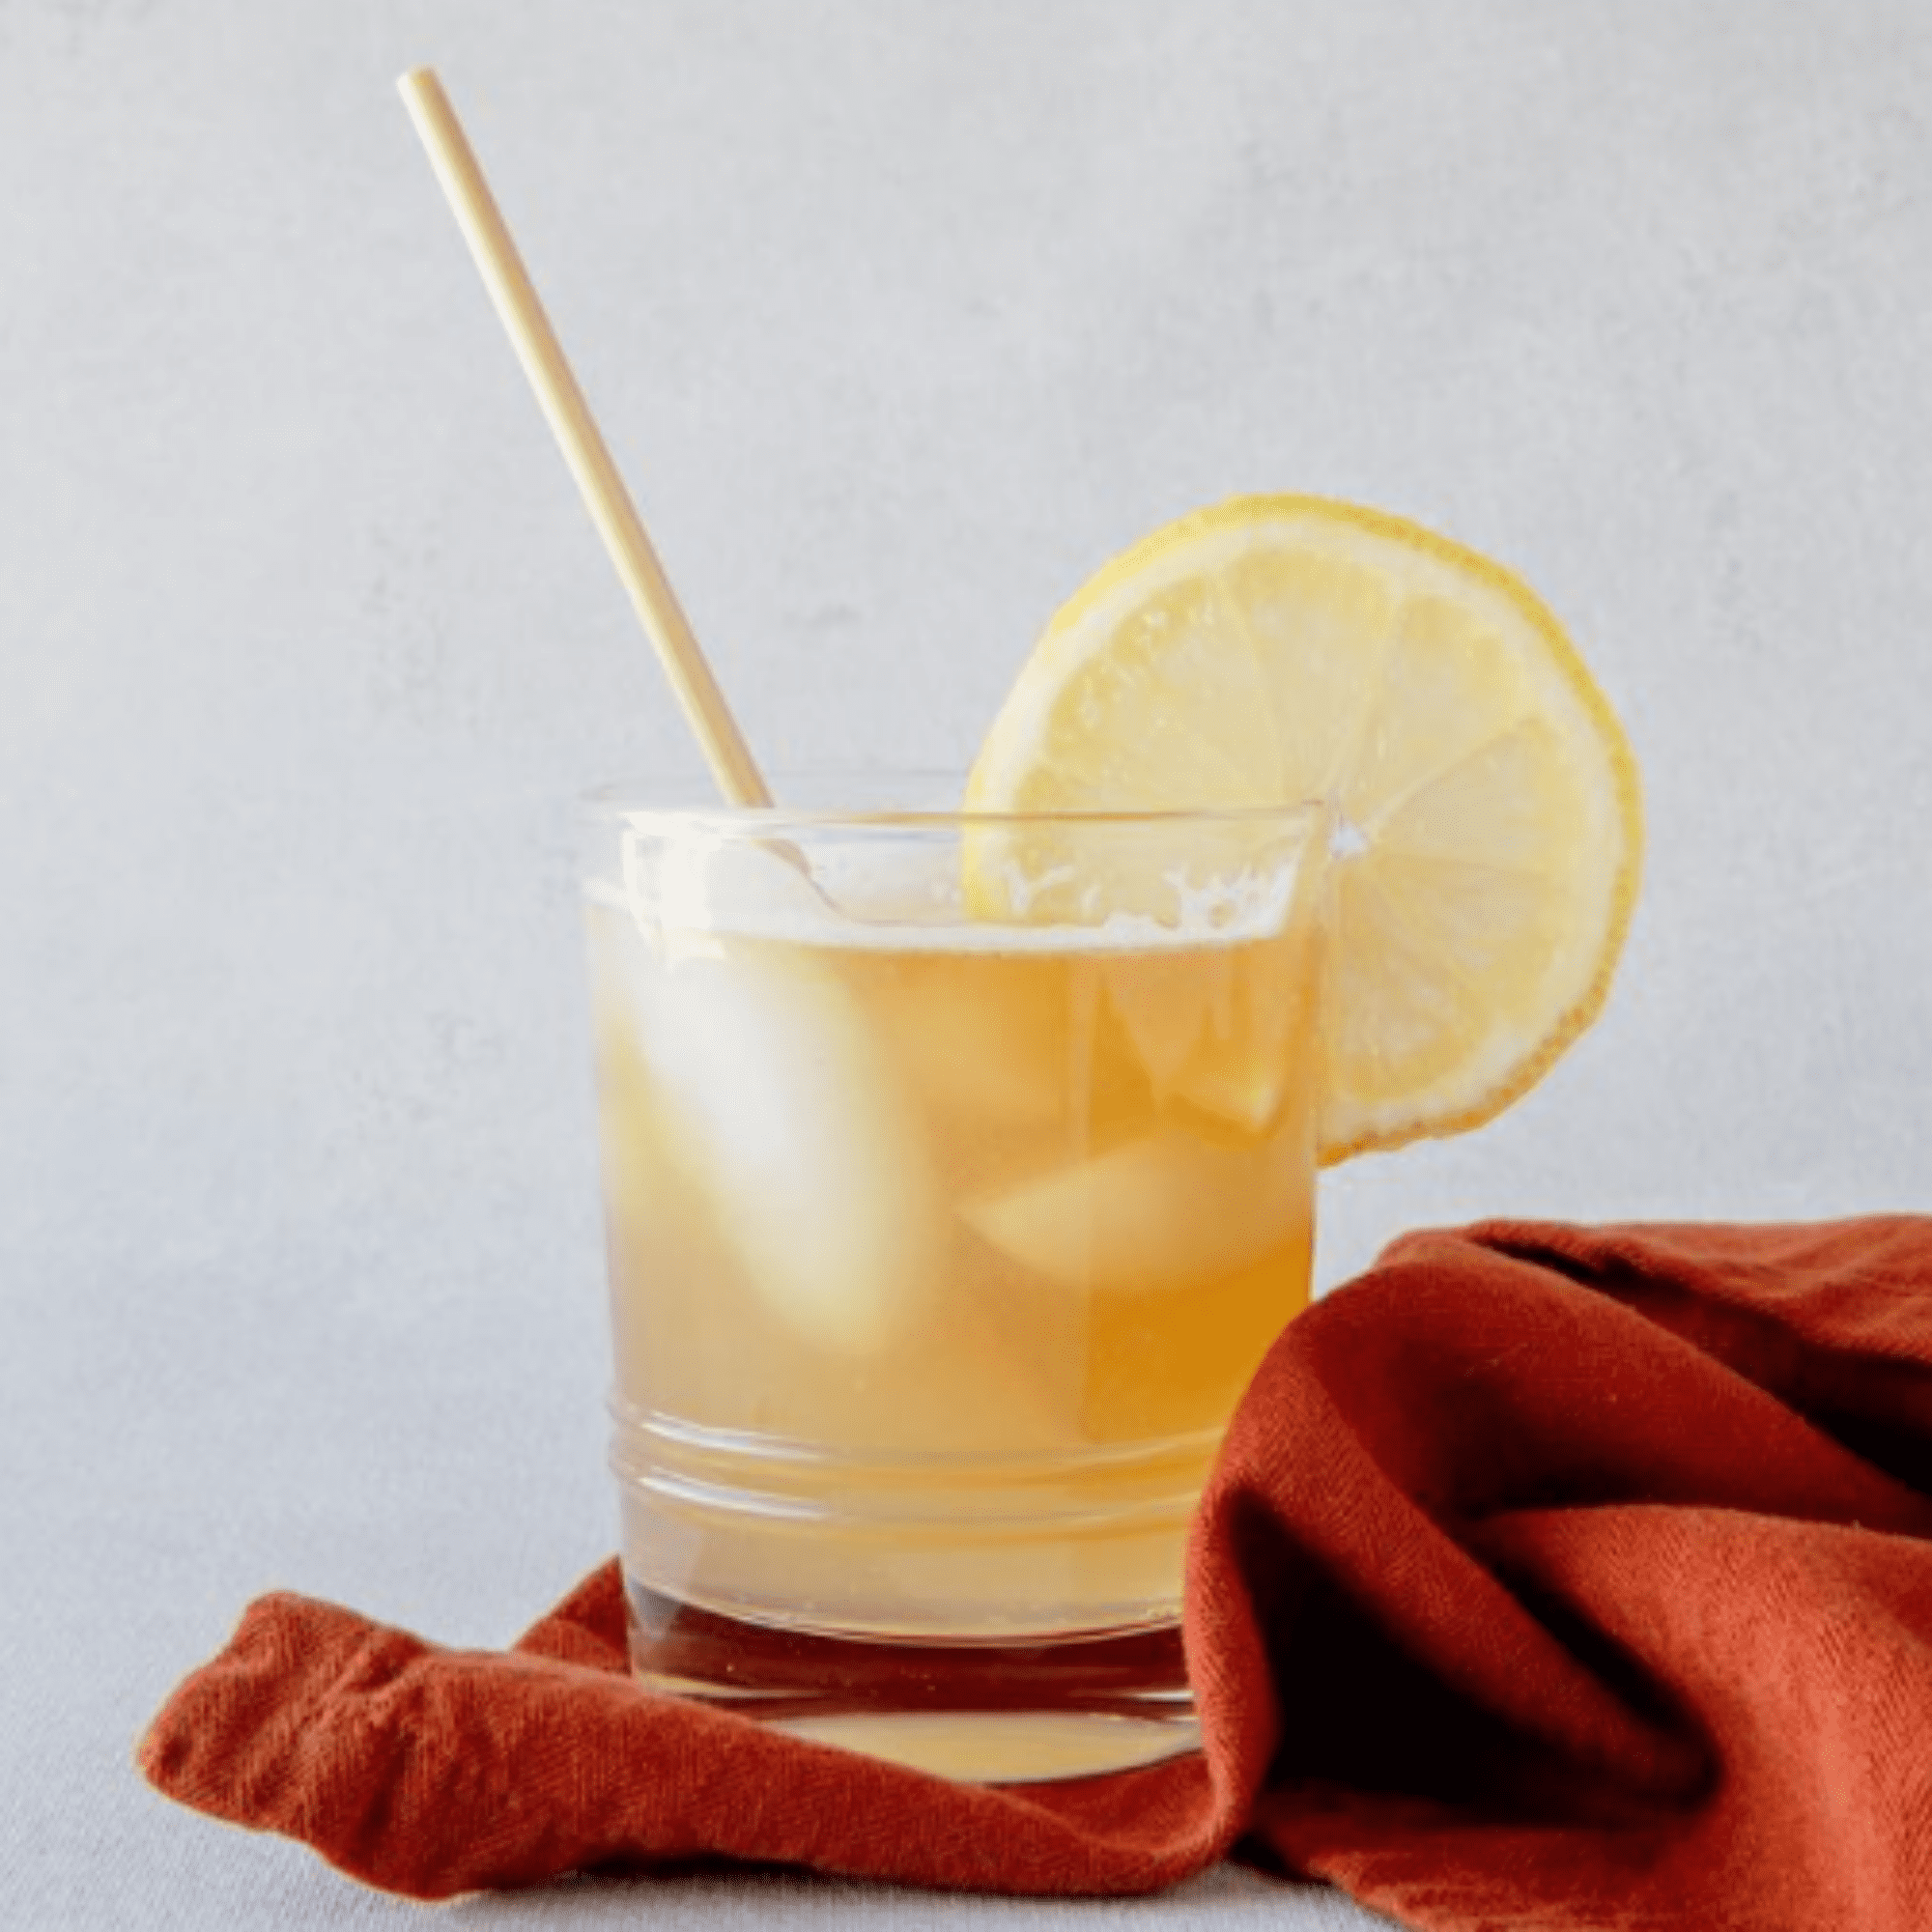 iced tea garnish with large lemon and wheat straw